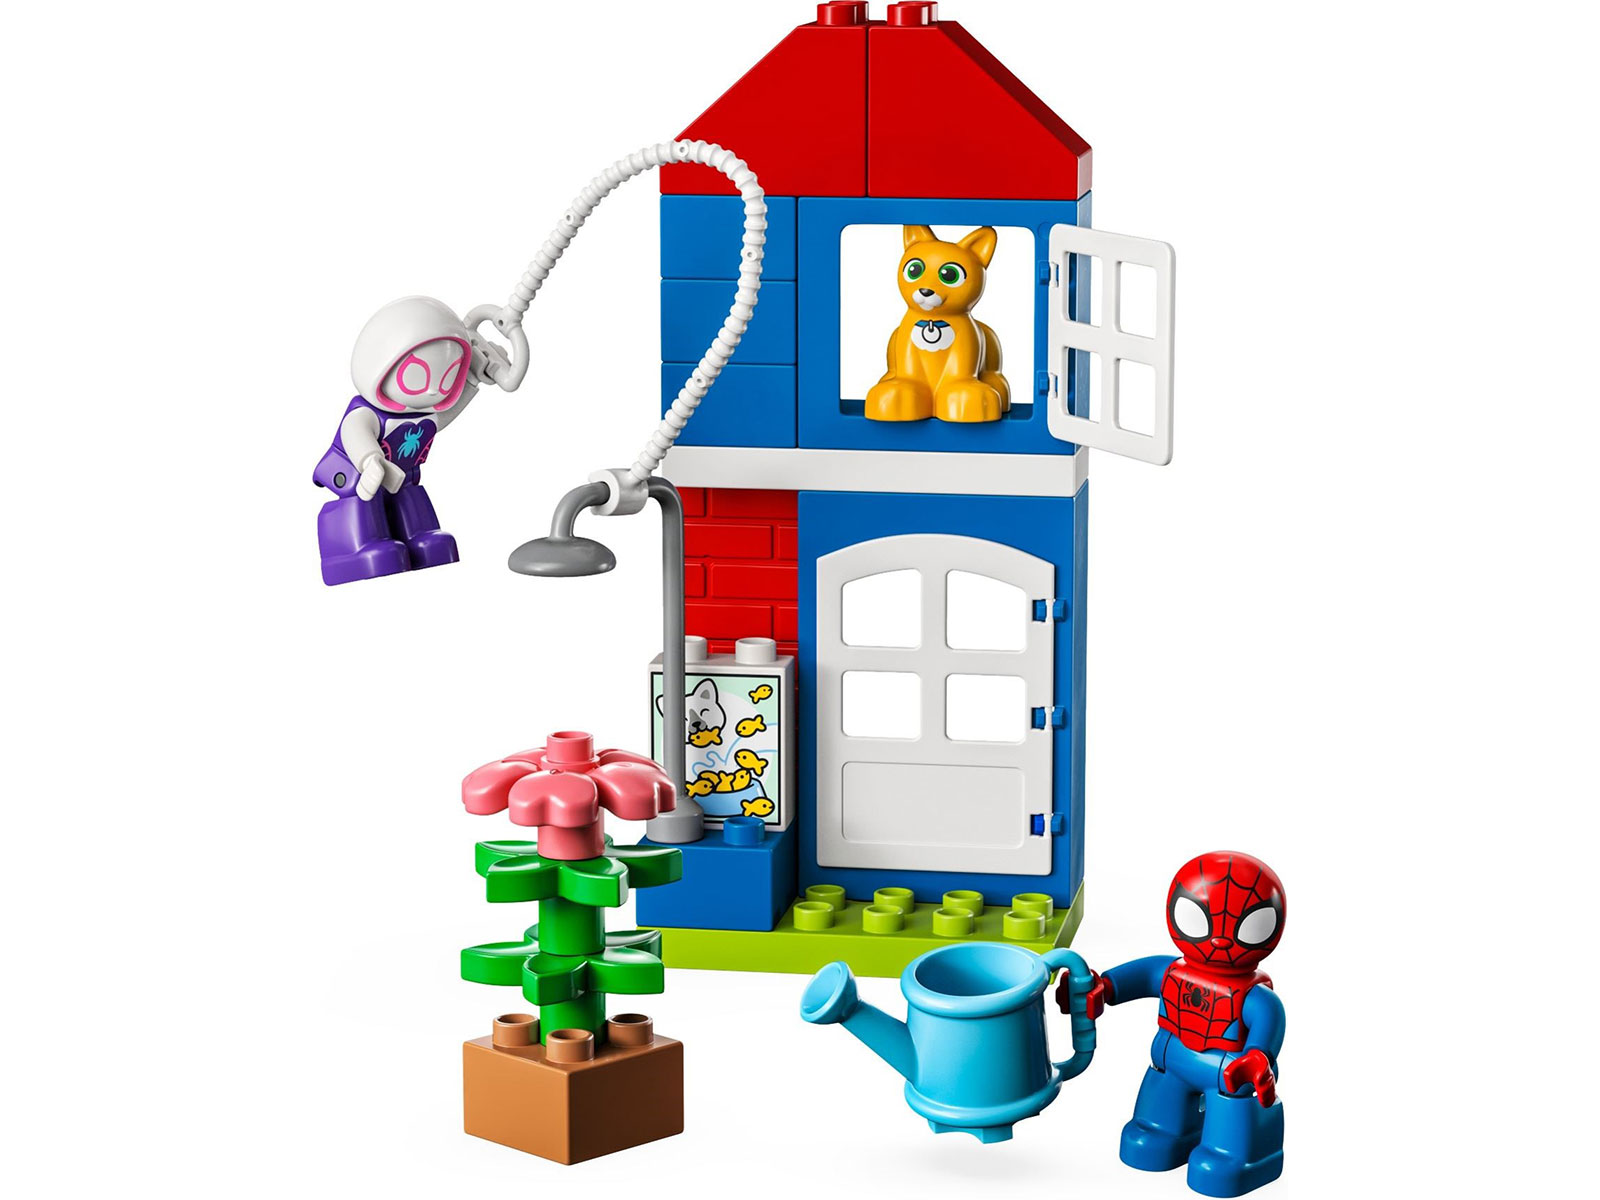 LEGO® DUPLO® 10995 - Spider-Mans Haus